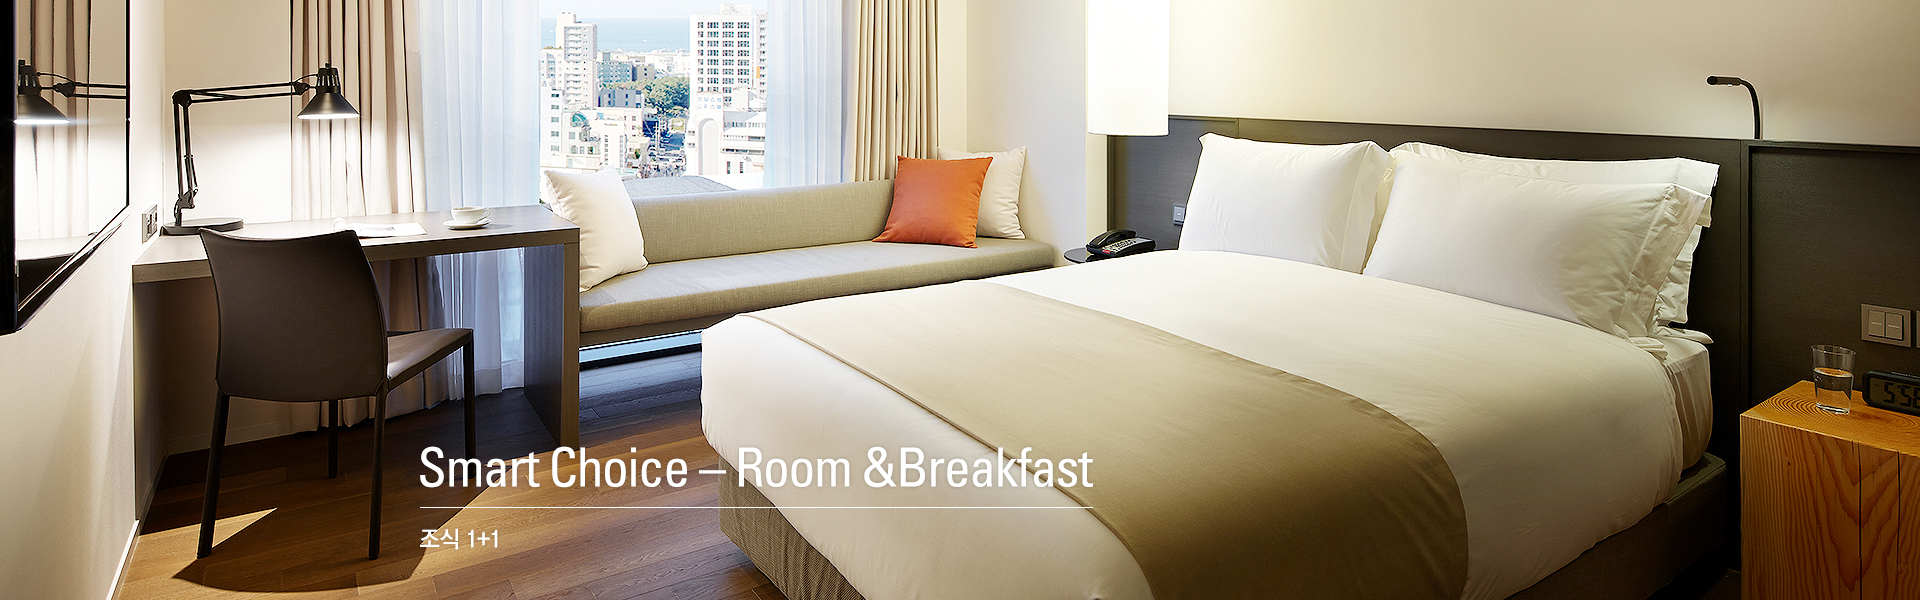 Smart Choice – Room & Breakfast